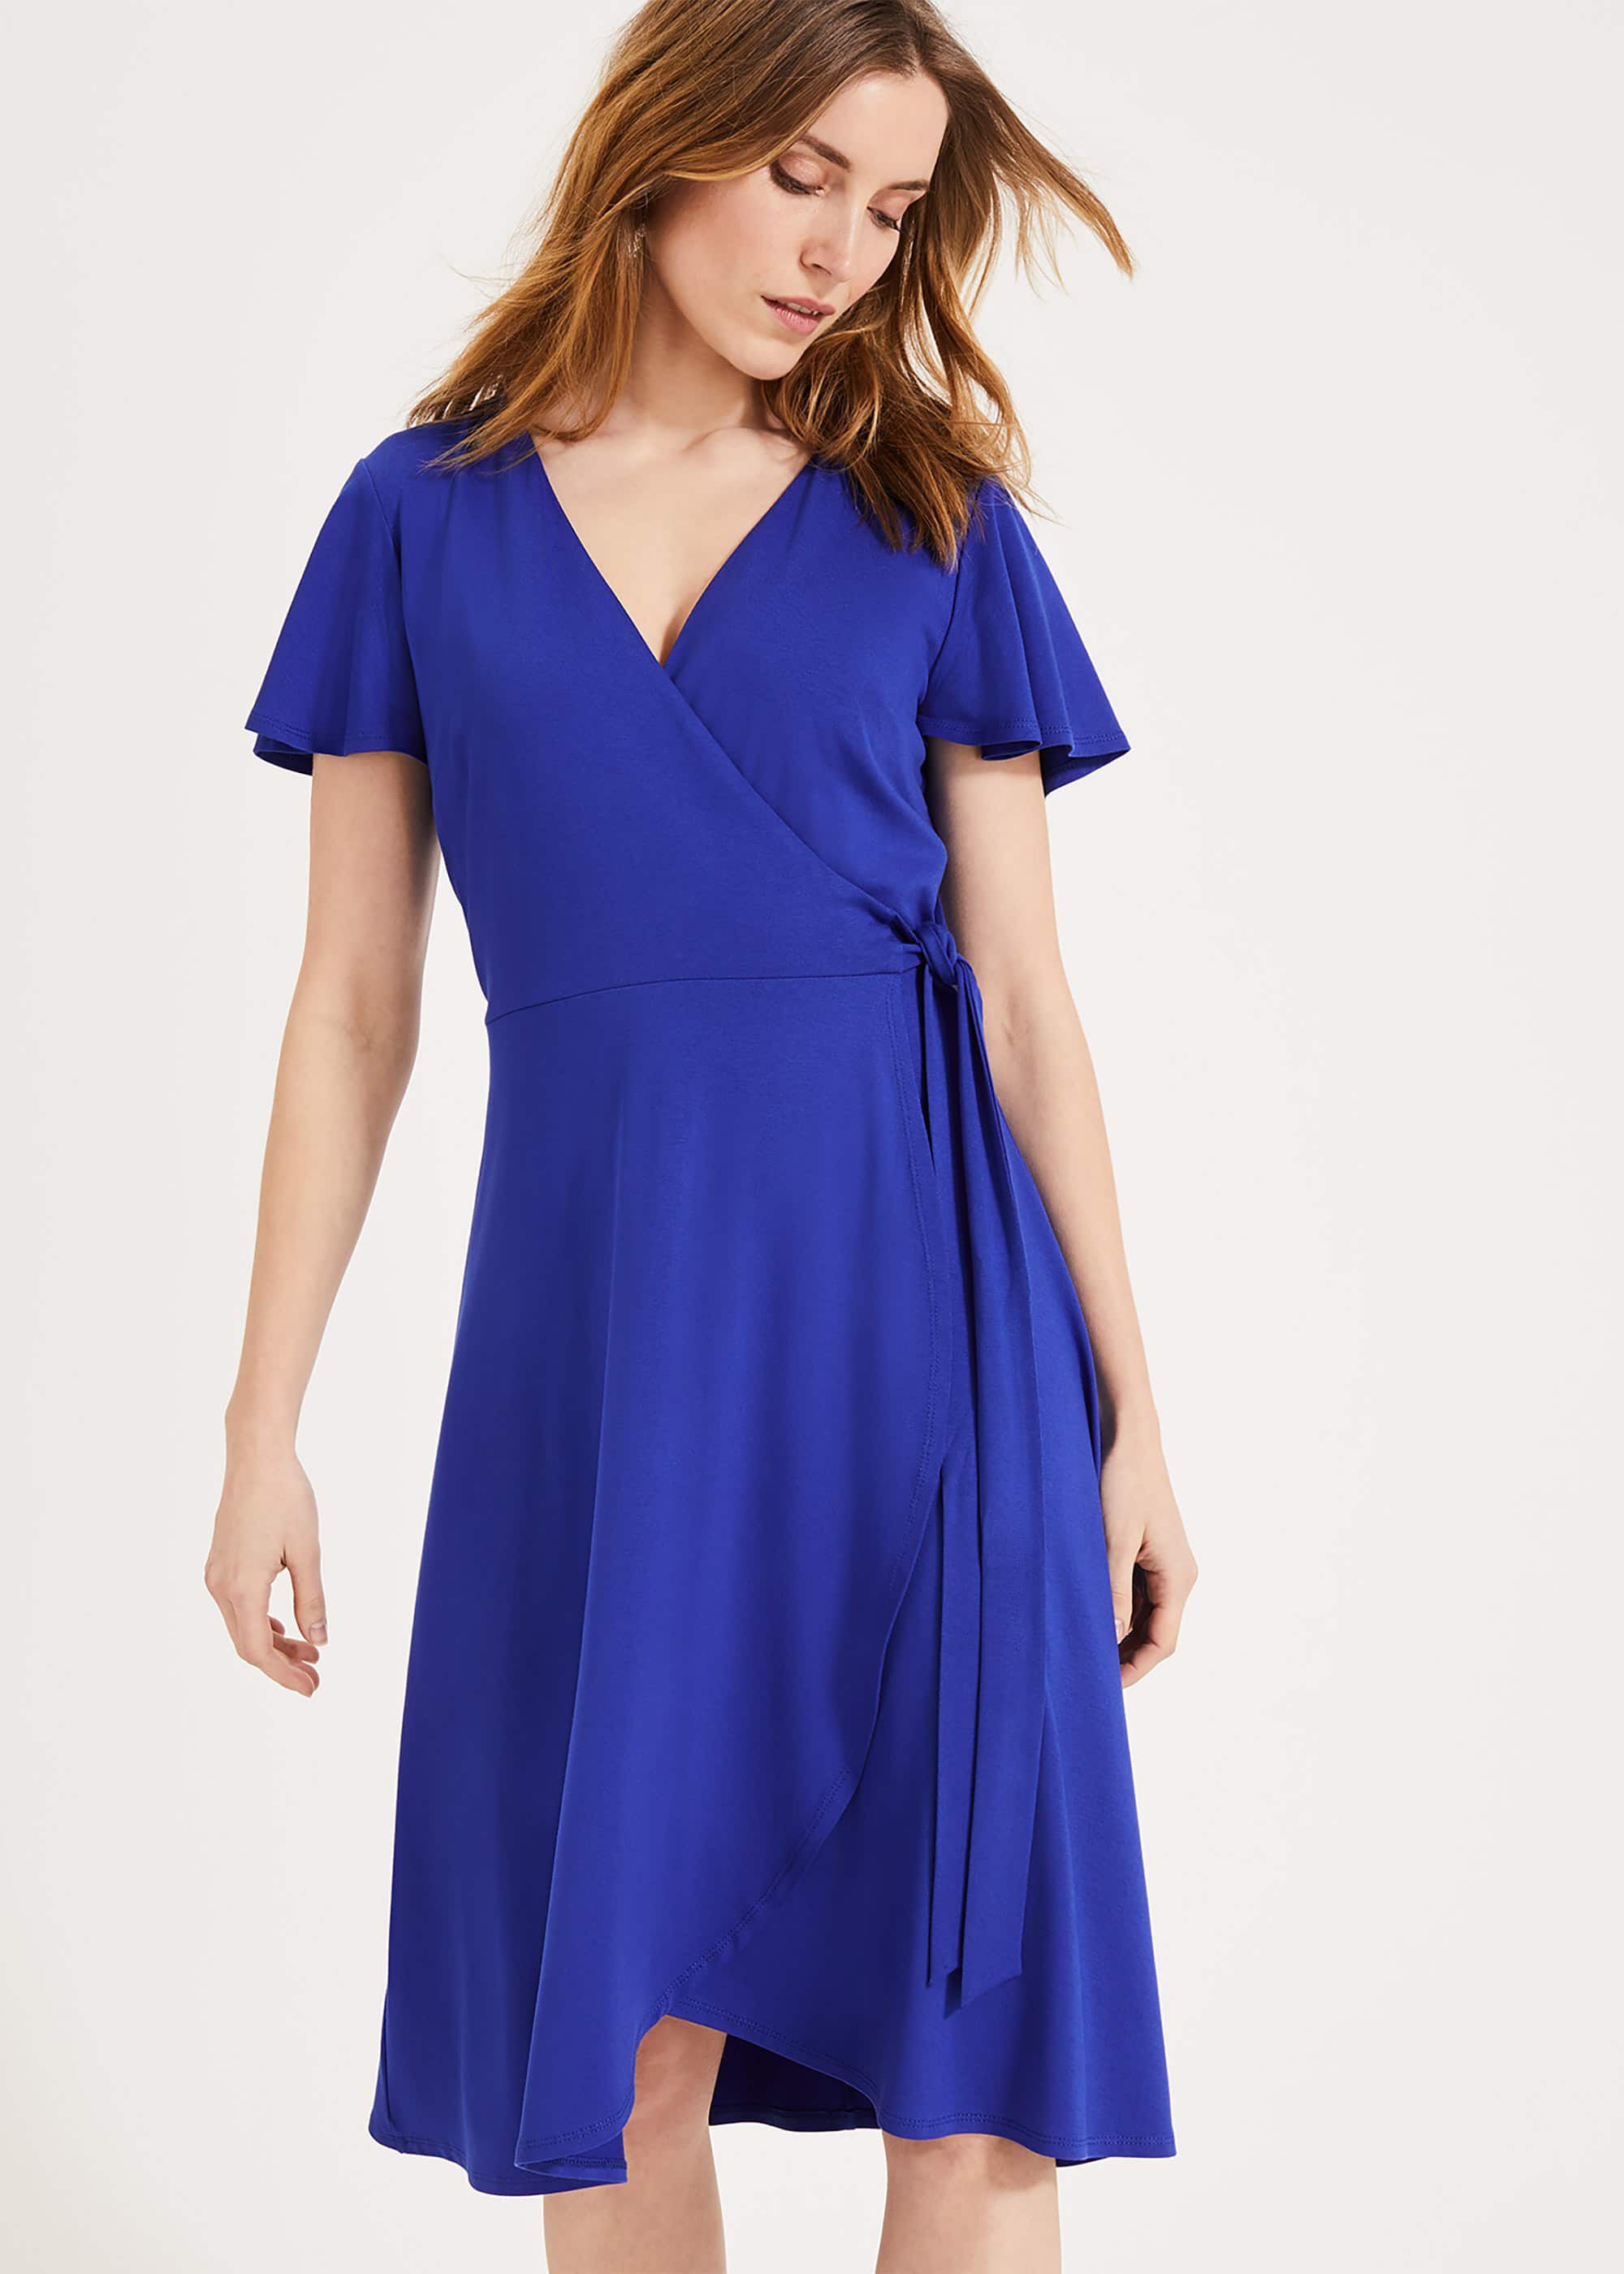 phase eight cobalt blue dress